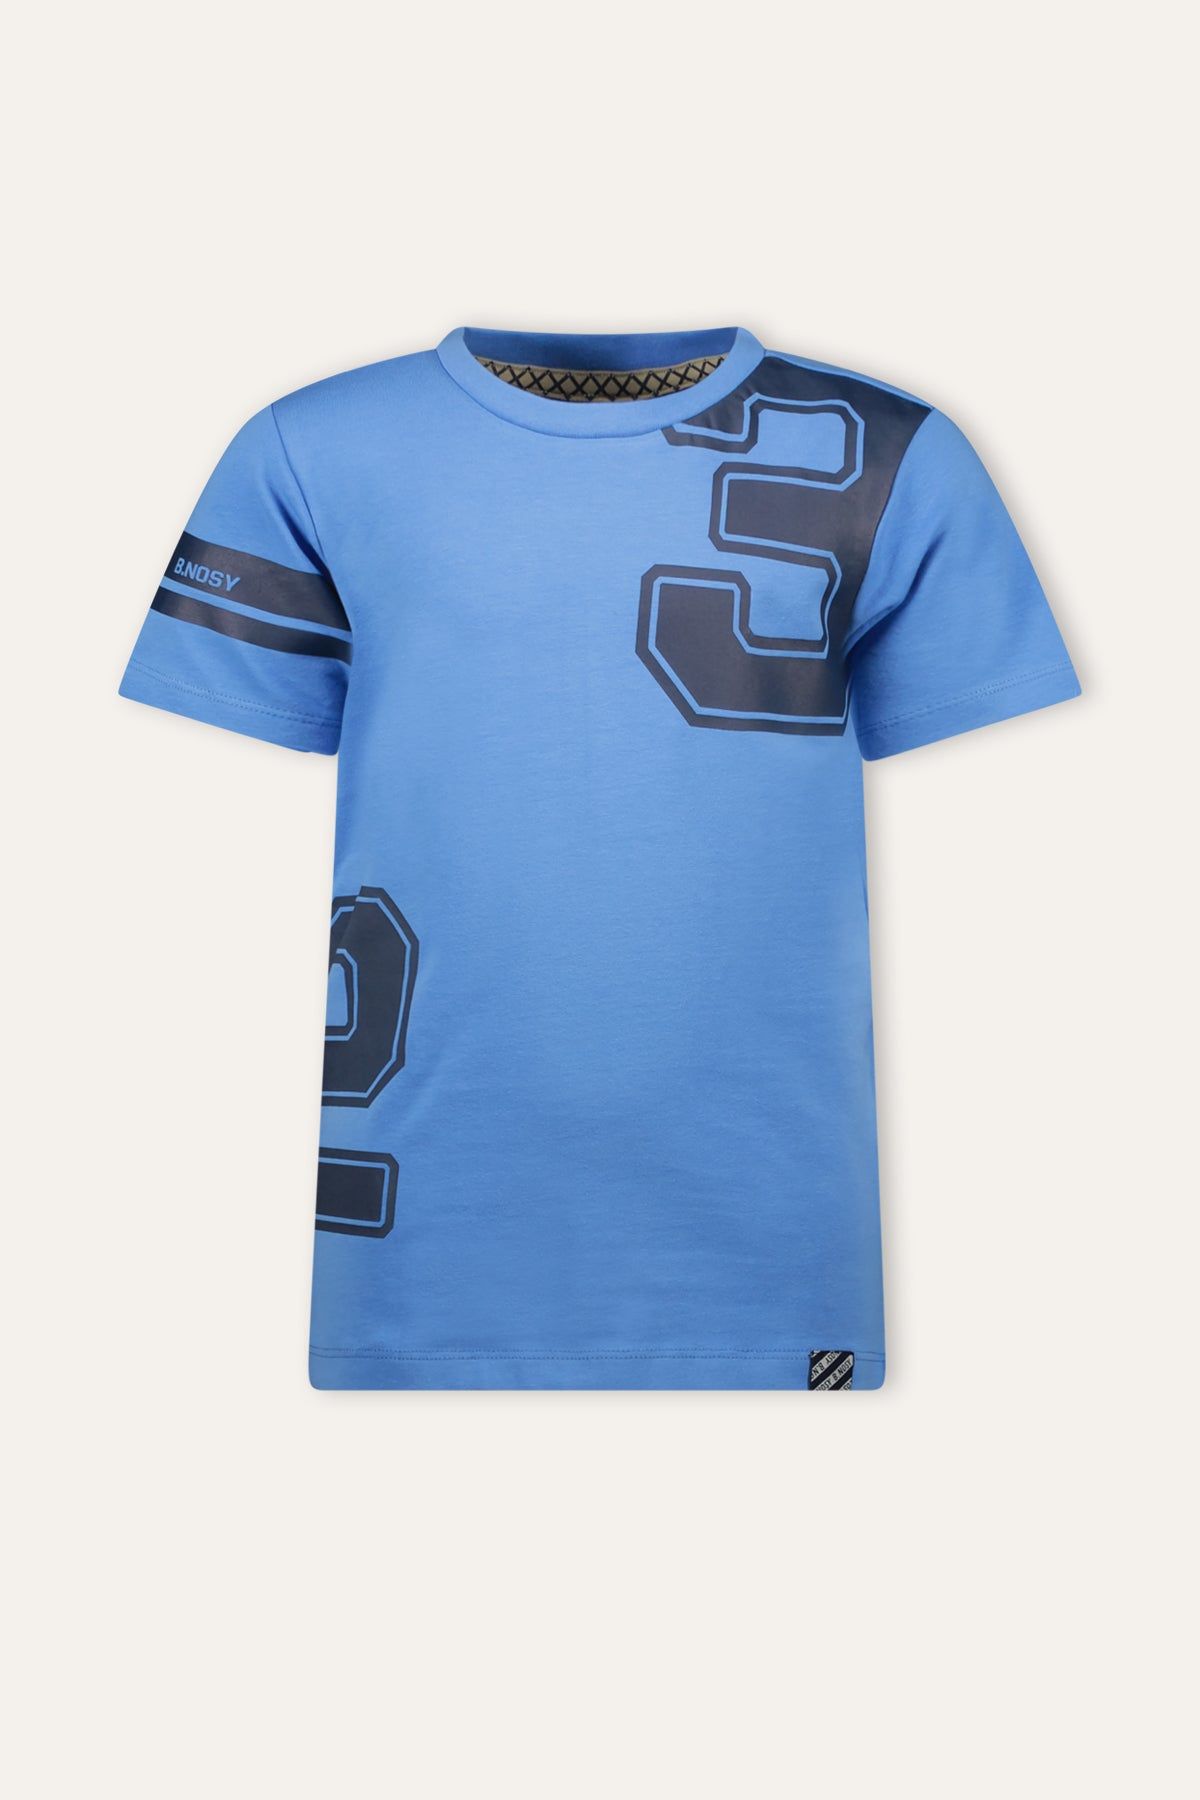 T-Shirt Puk B.Nosy boys t-shirt blauw